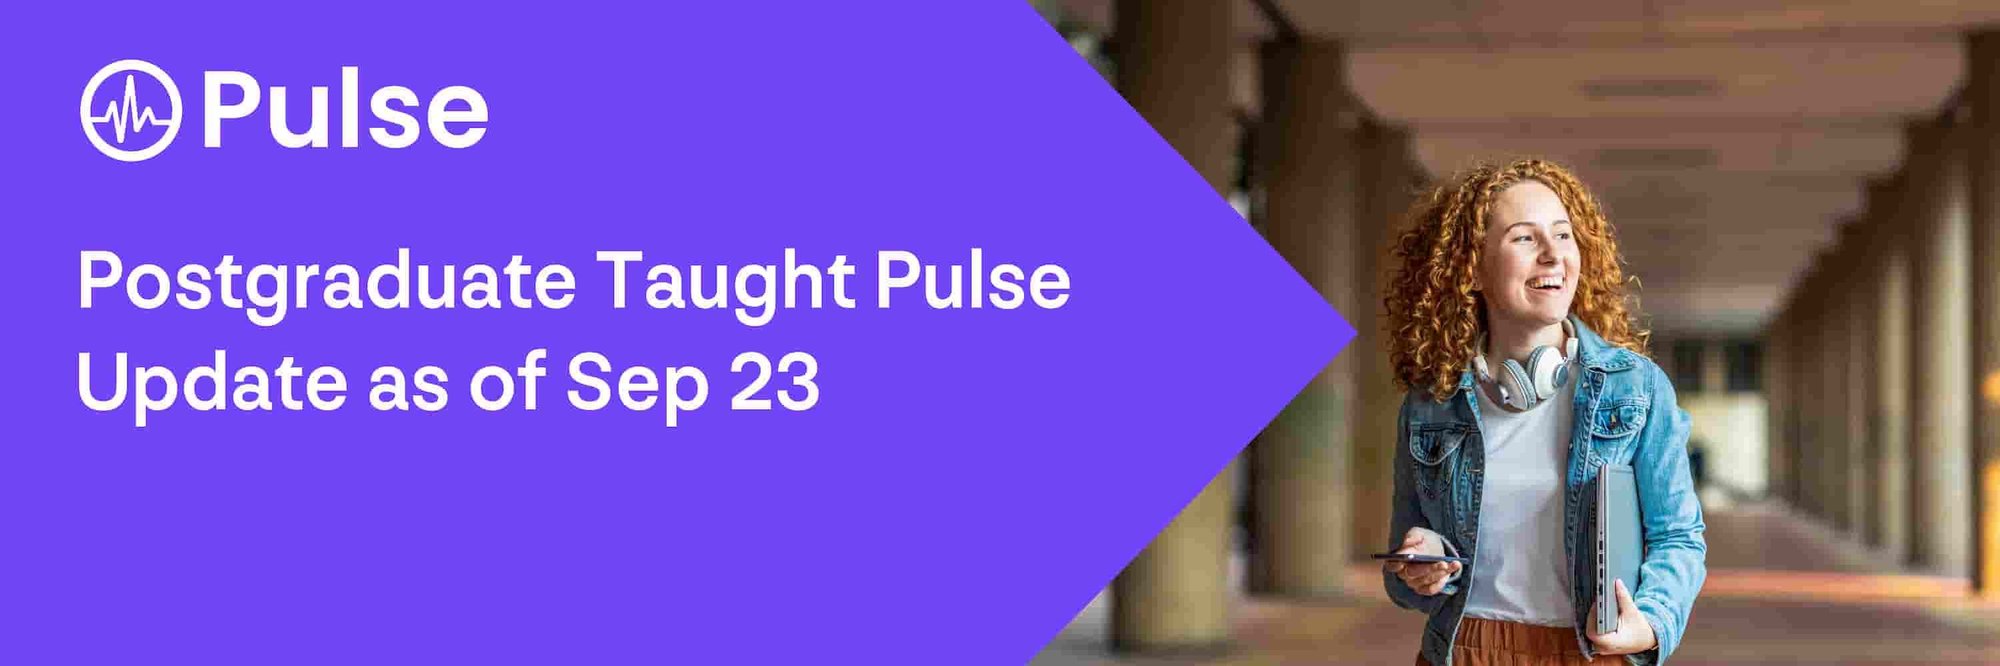 Pulse Postgraduate Taught Pulse Update as of Sep 23